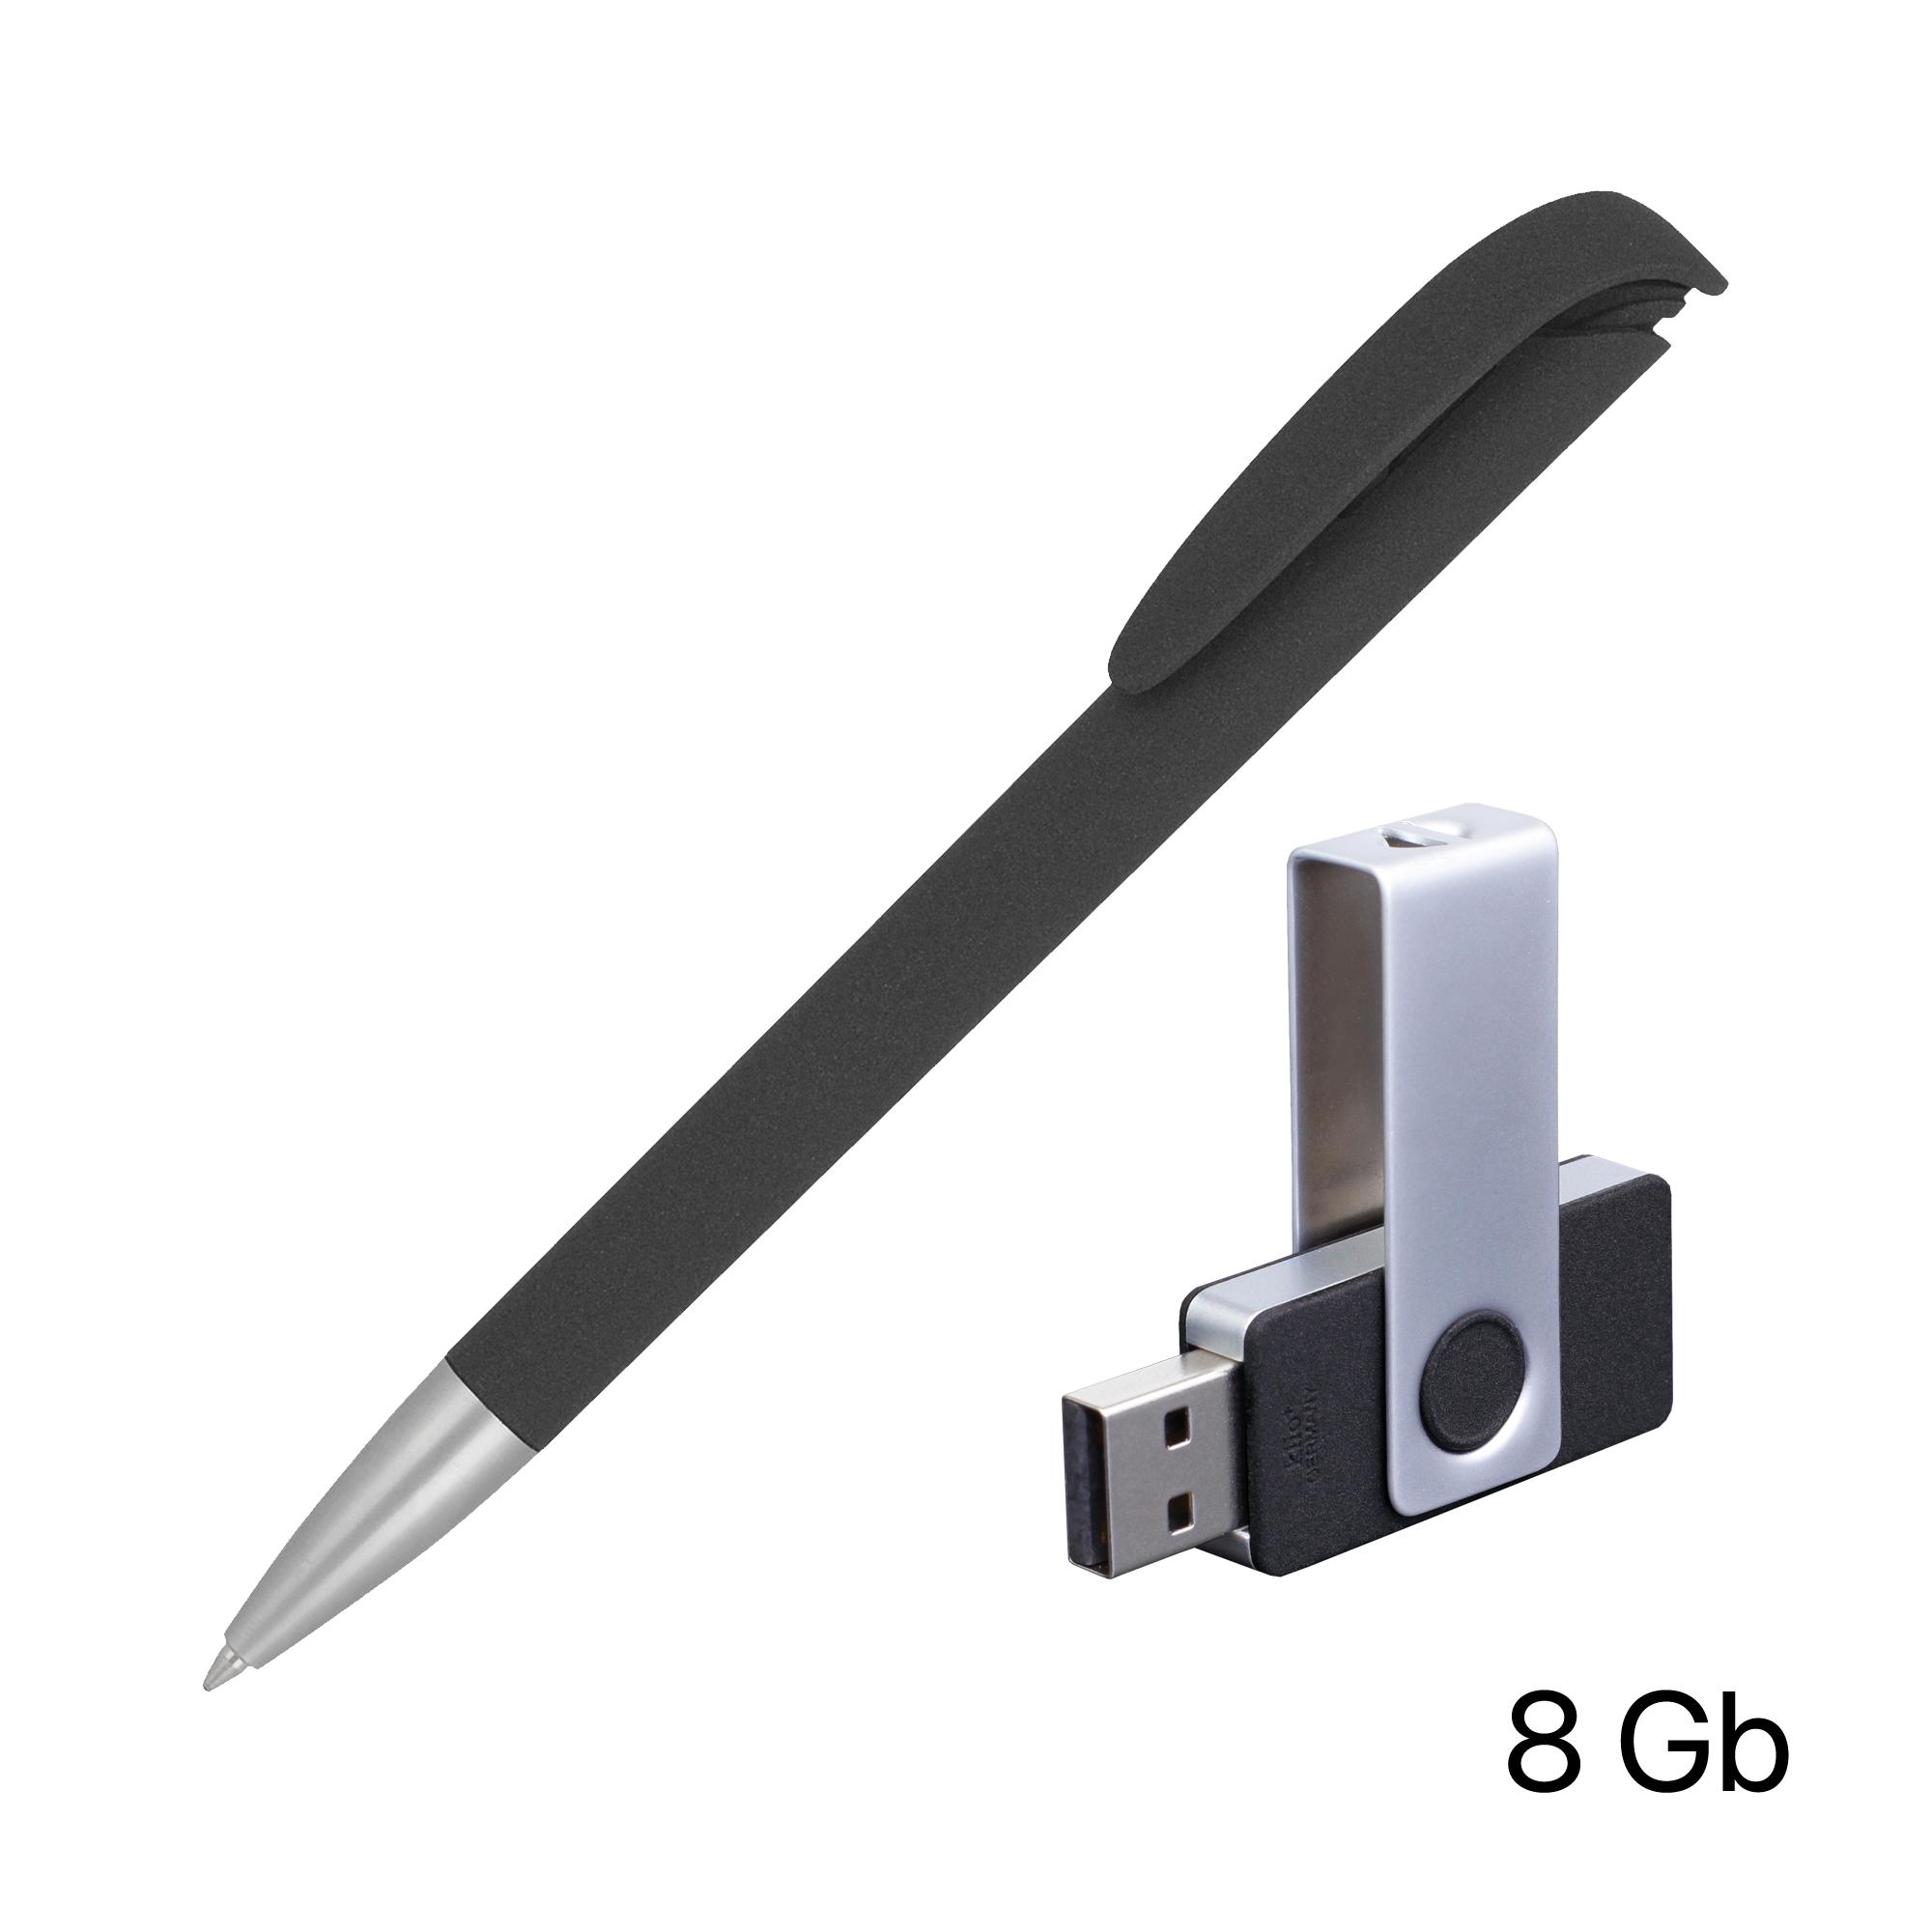 Набор ручка + флеш-карта 8Гб в футляре, цвет черный, фото 1